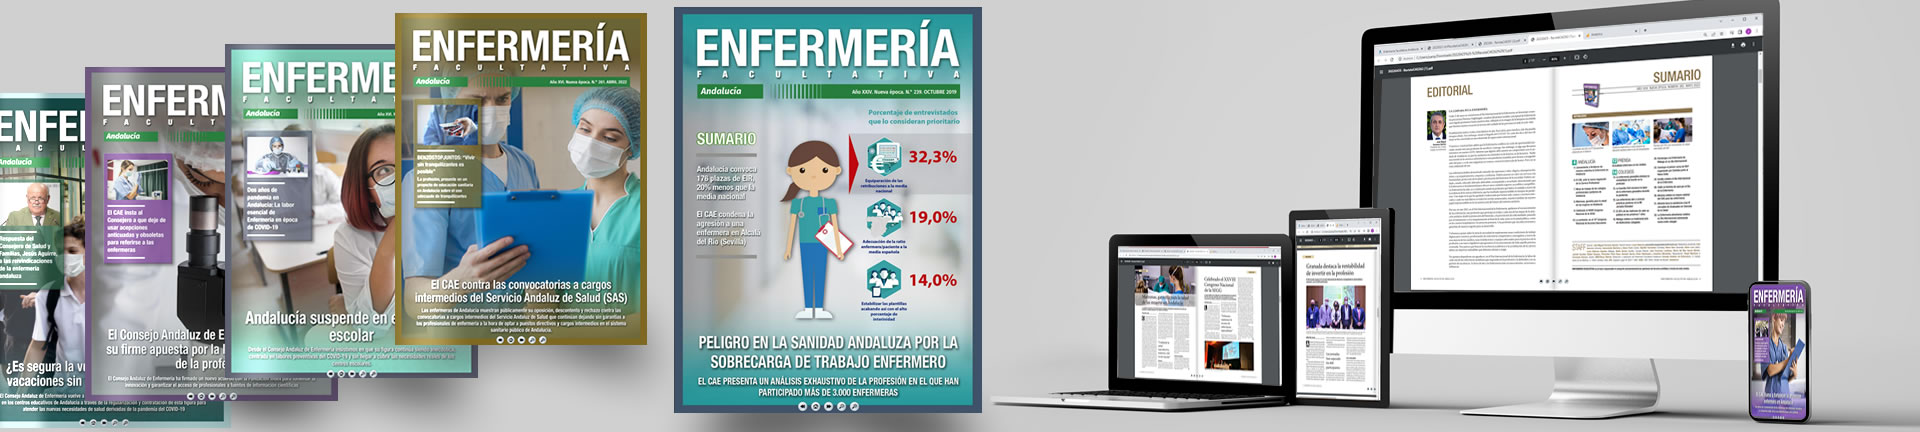 Consejo Andaluz de Colegios de Enfermería - CAE - Revista Enfermería Facultativa número 239 - Edición Andalucía